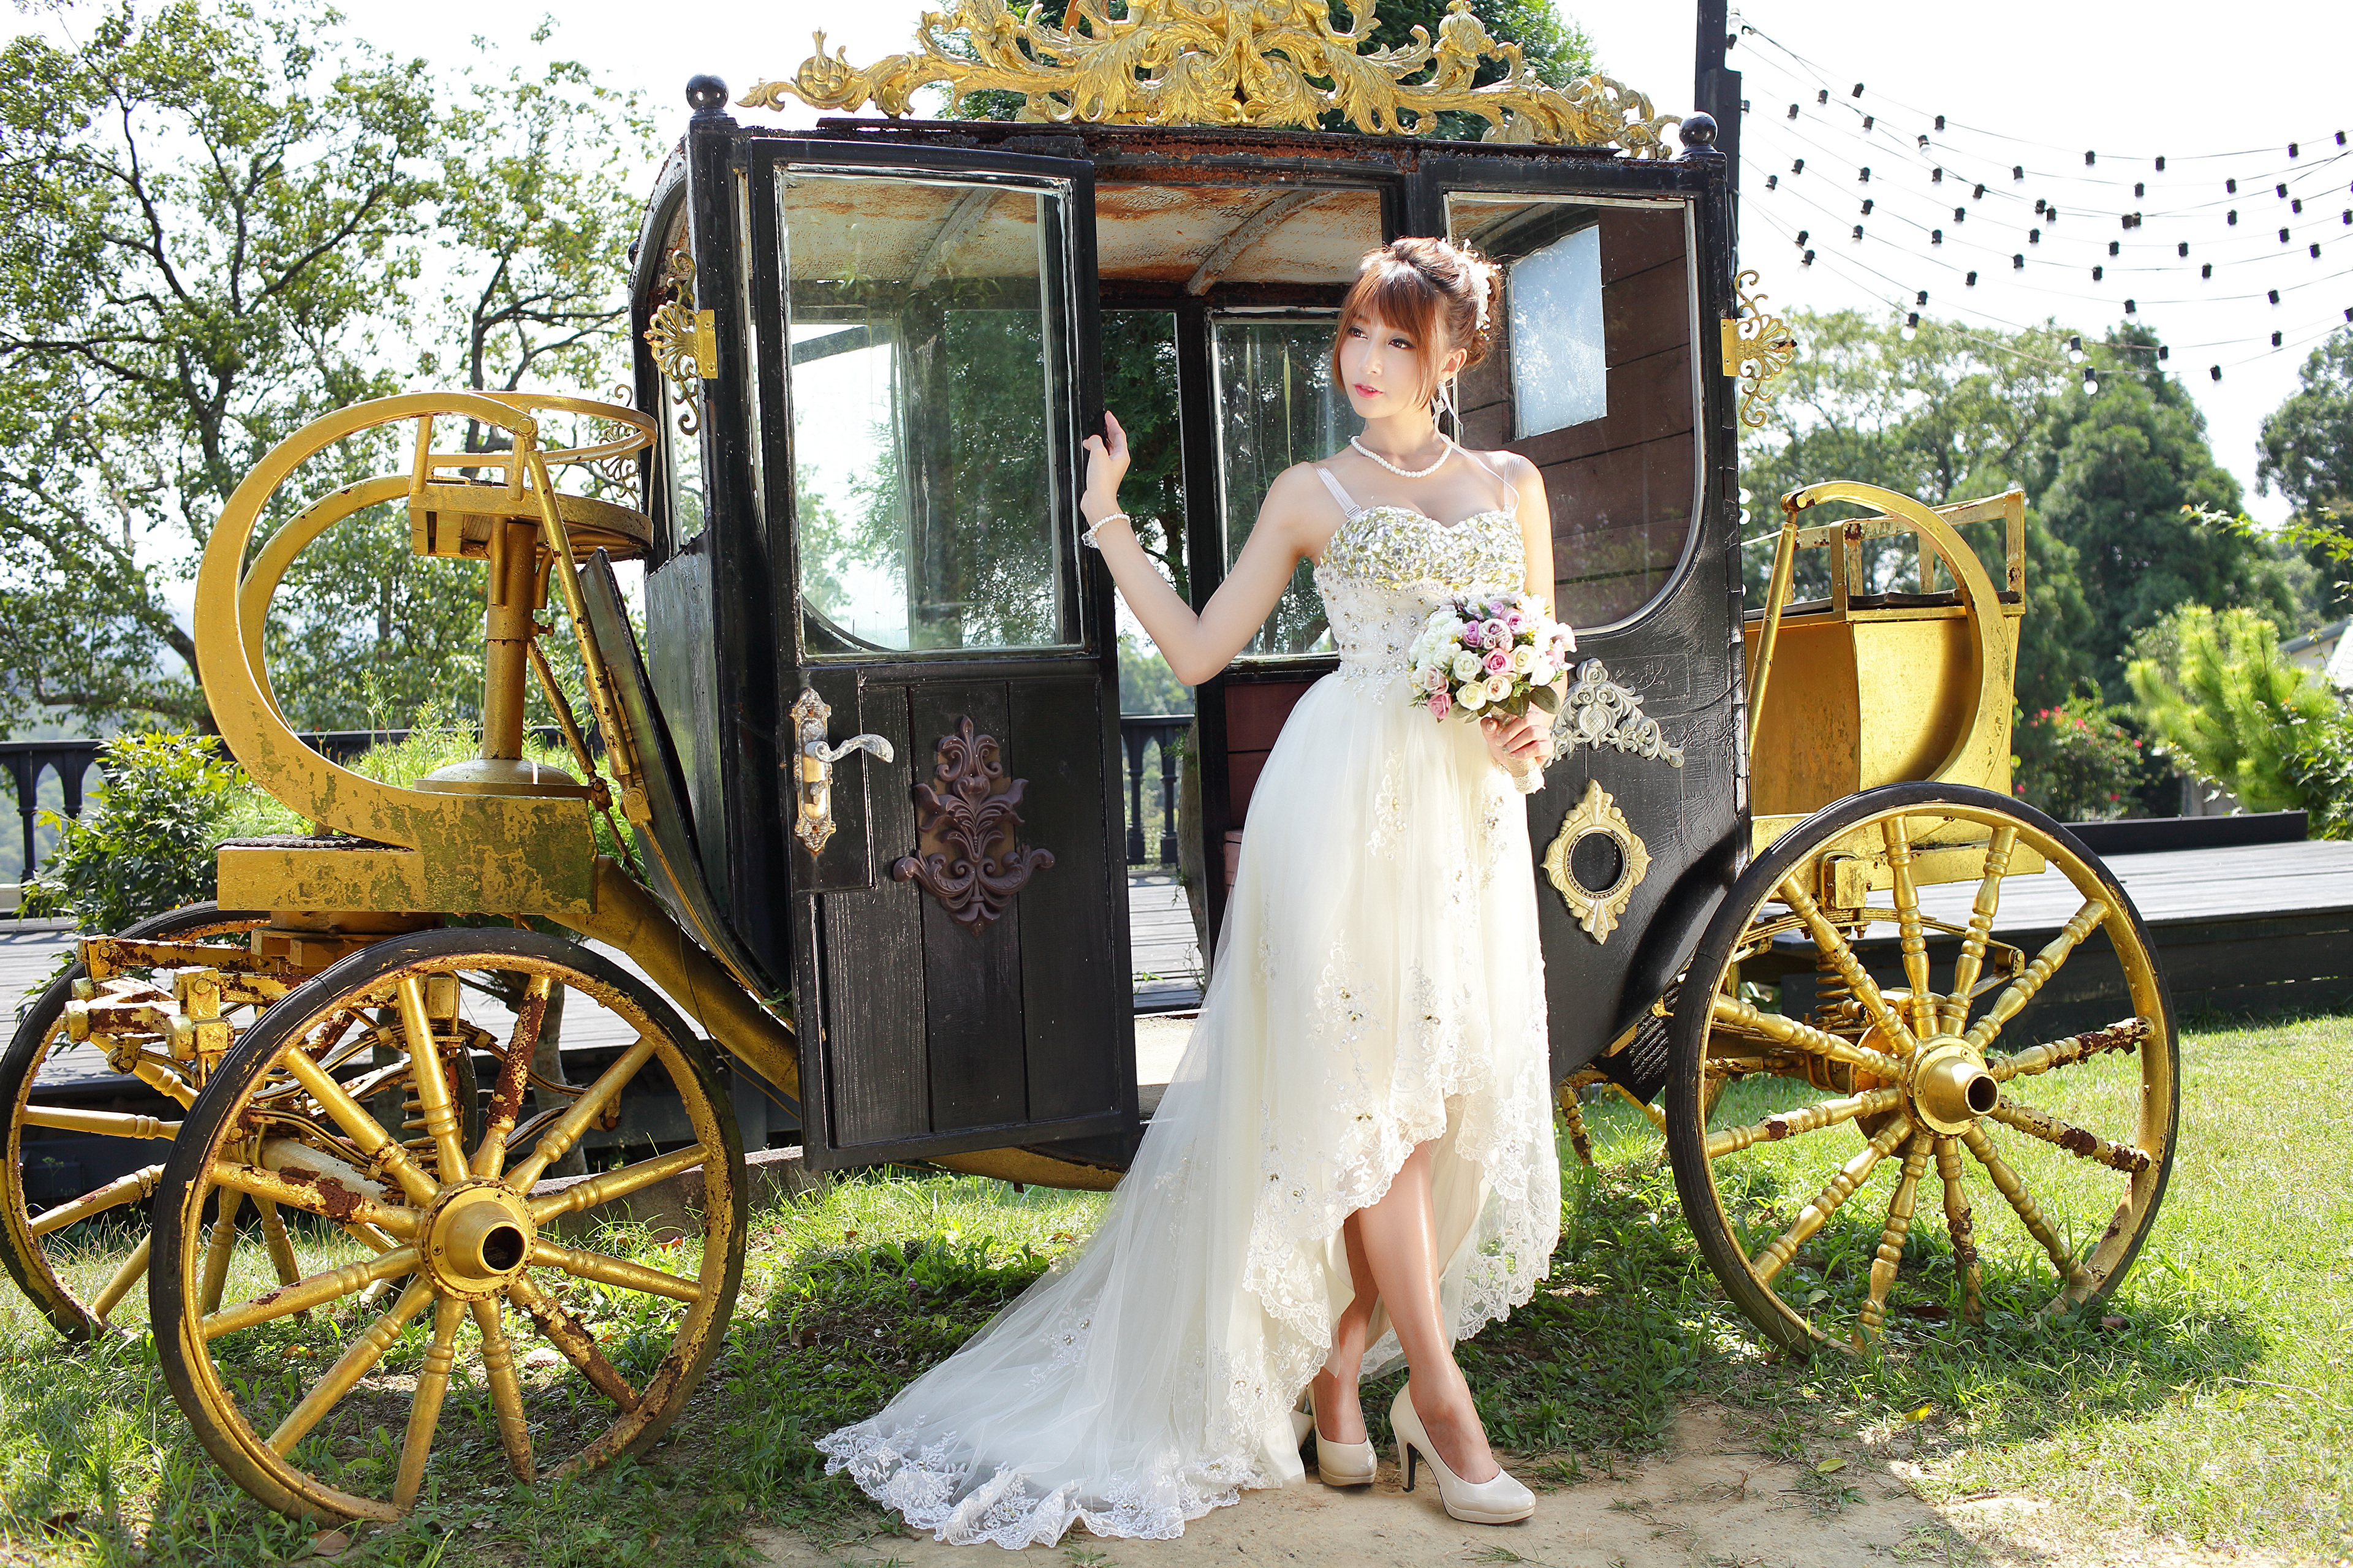 Asian Model Women Long Hair Brunette Wedding Dress Carriage White High Heels Flowers Hair Ornament G 3840x2559